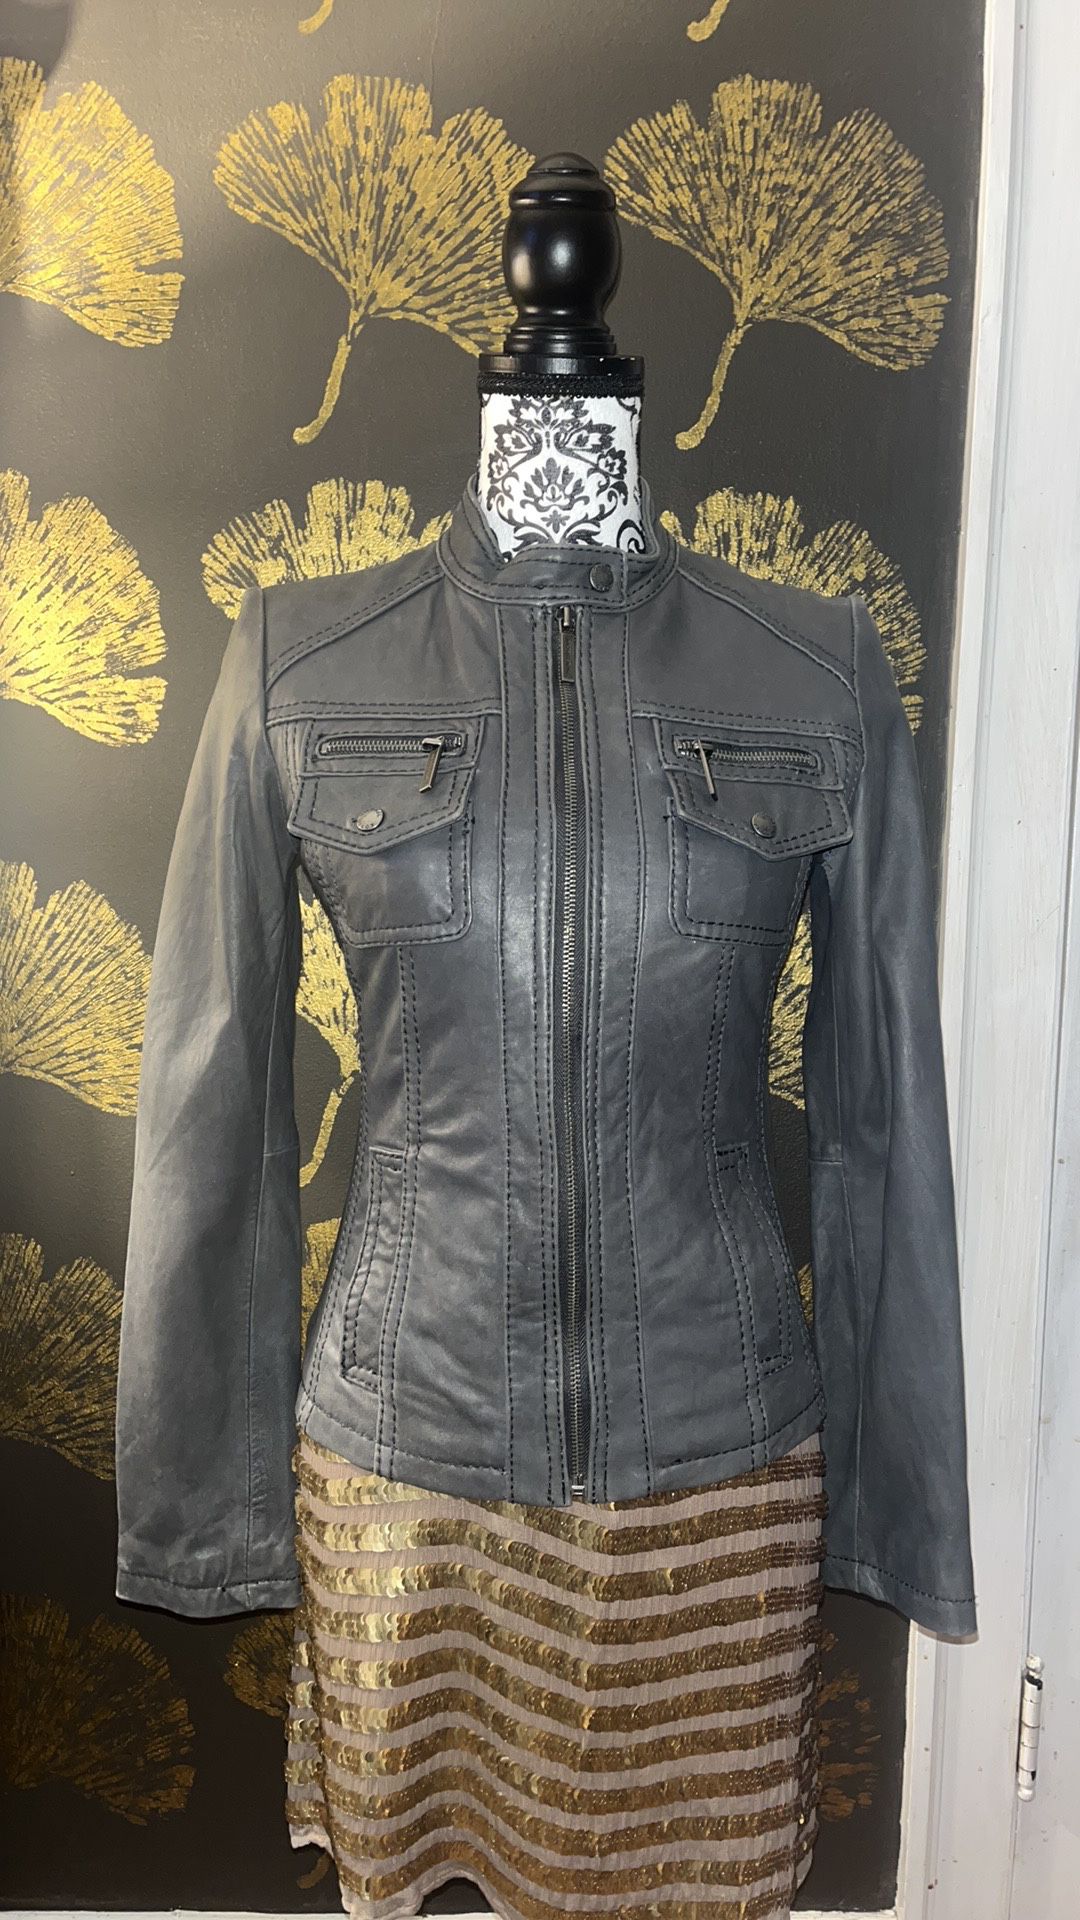 Michael Kors Gray 100% Leather Motorcycle Bomber Jacket